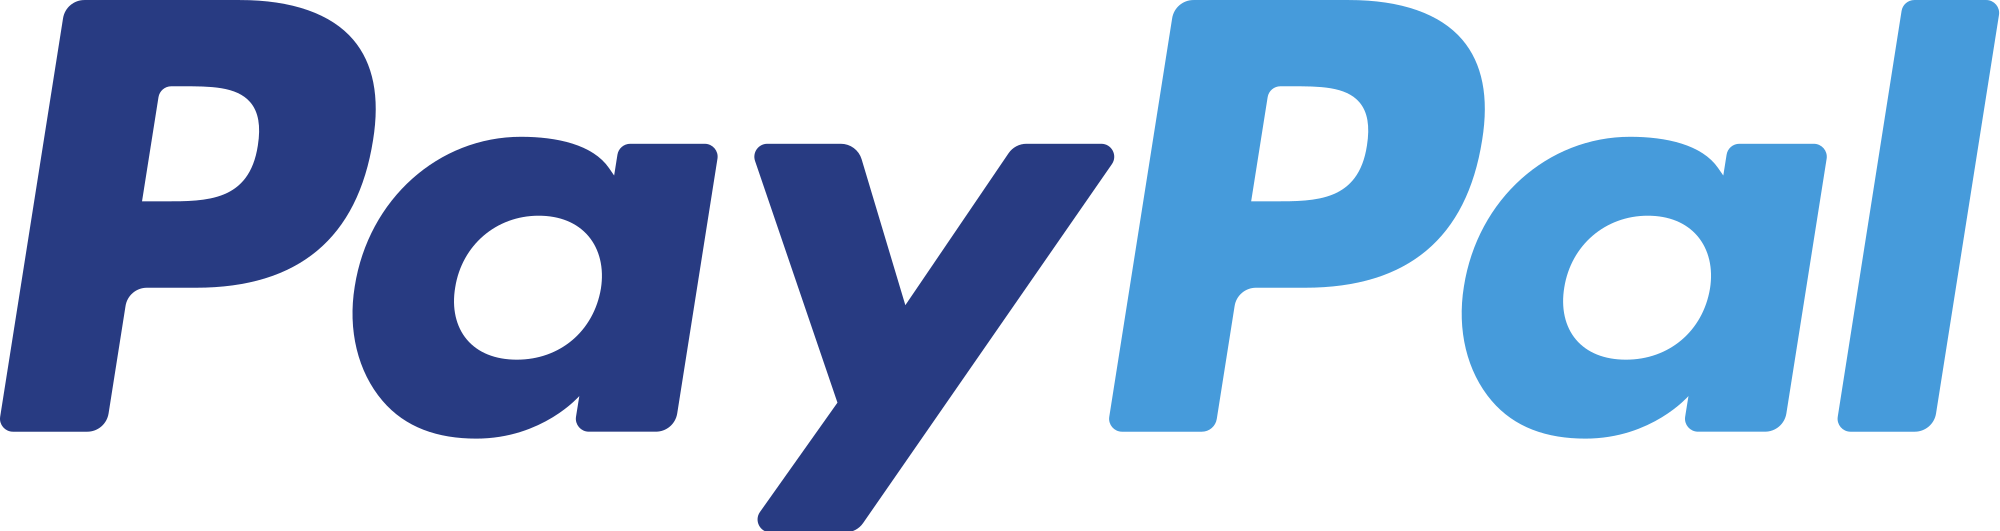 PayPal 2018 Logo - commercetools Partner